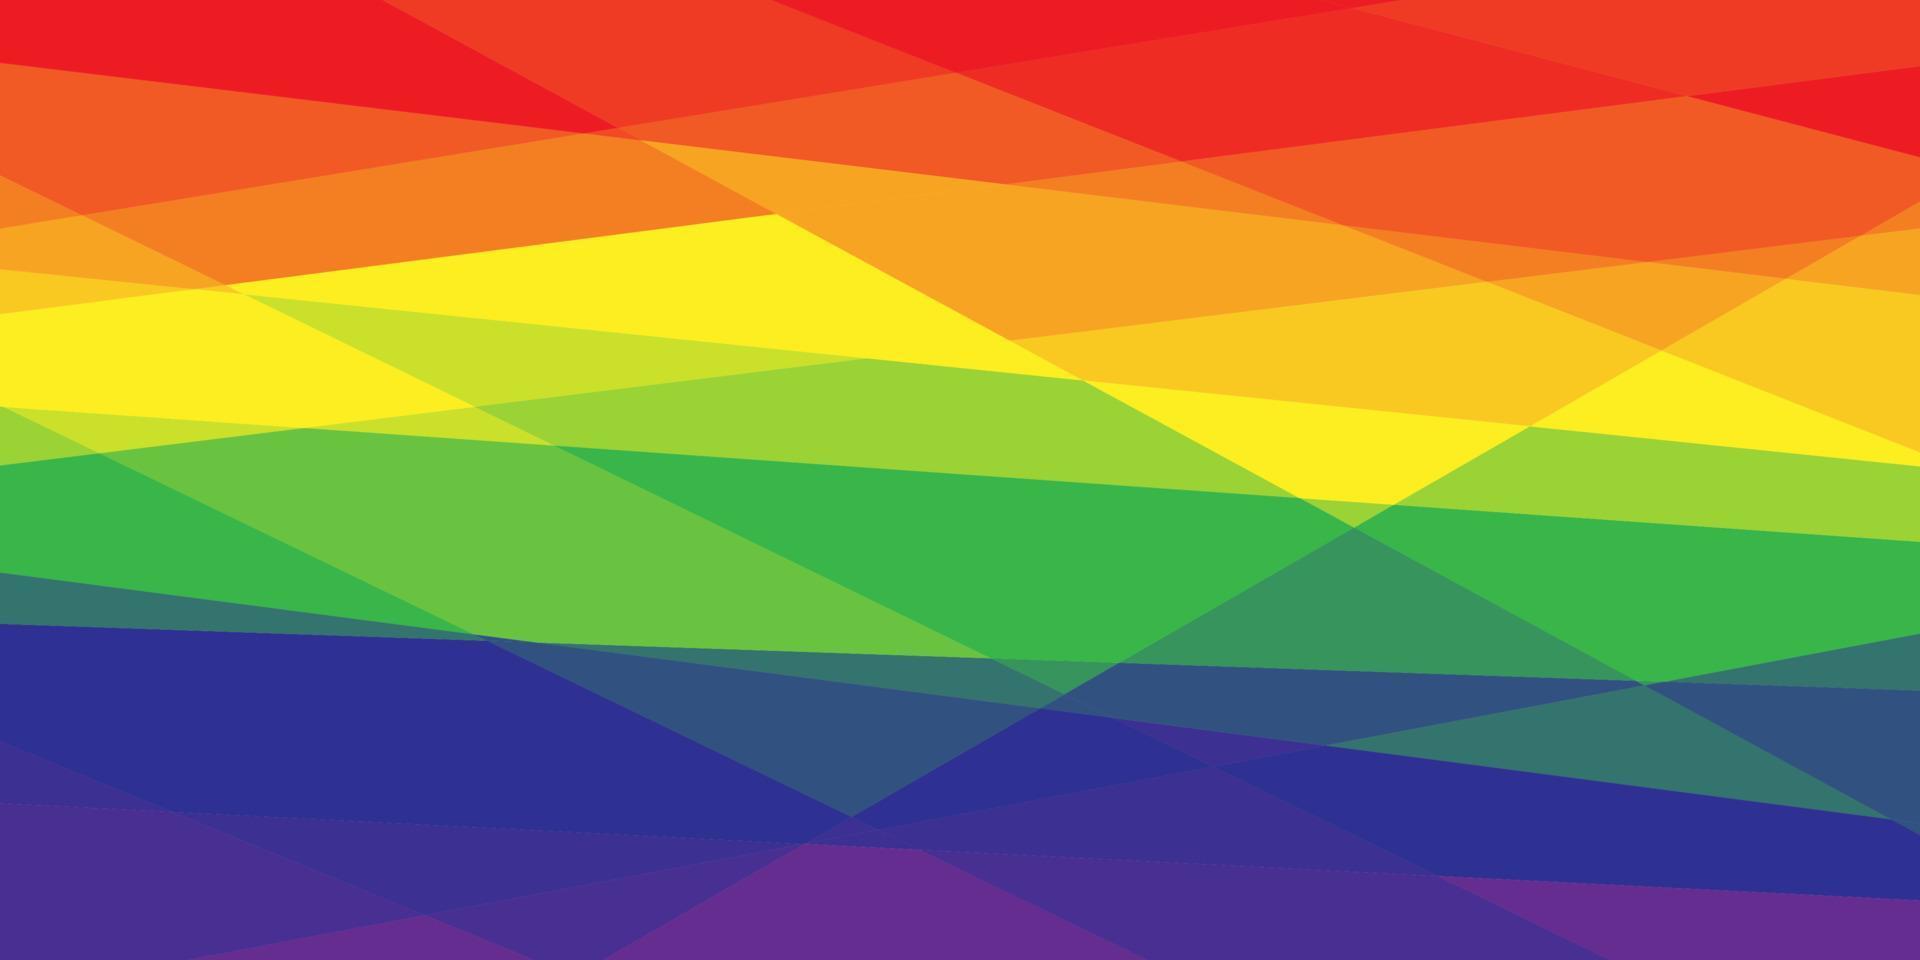 regnbåge abstrakt bakgrund. färgglad mosaik geometrisk lgbt horisontell flagga. vektor illustration.